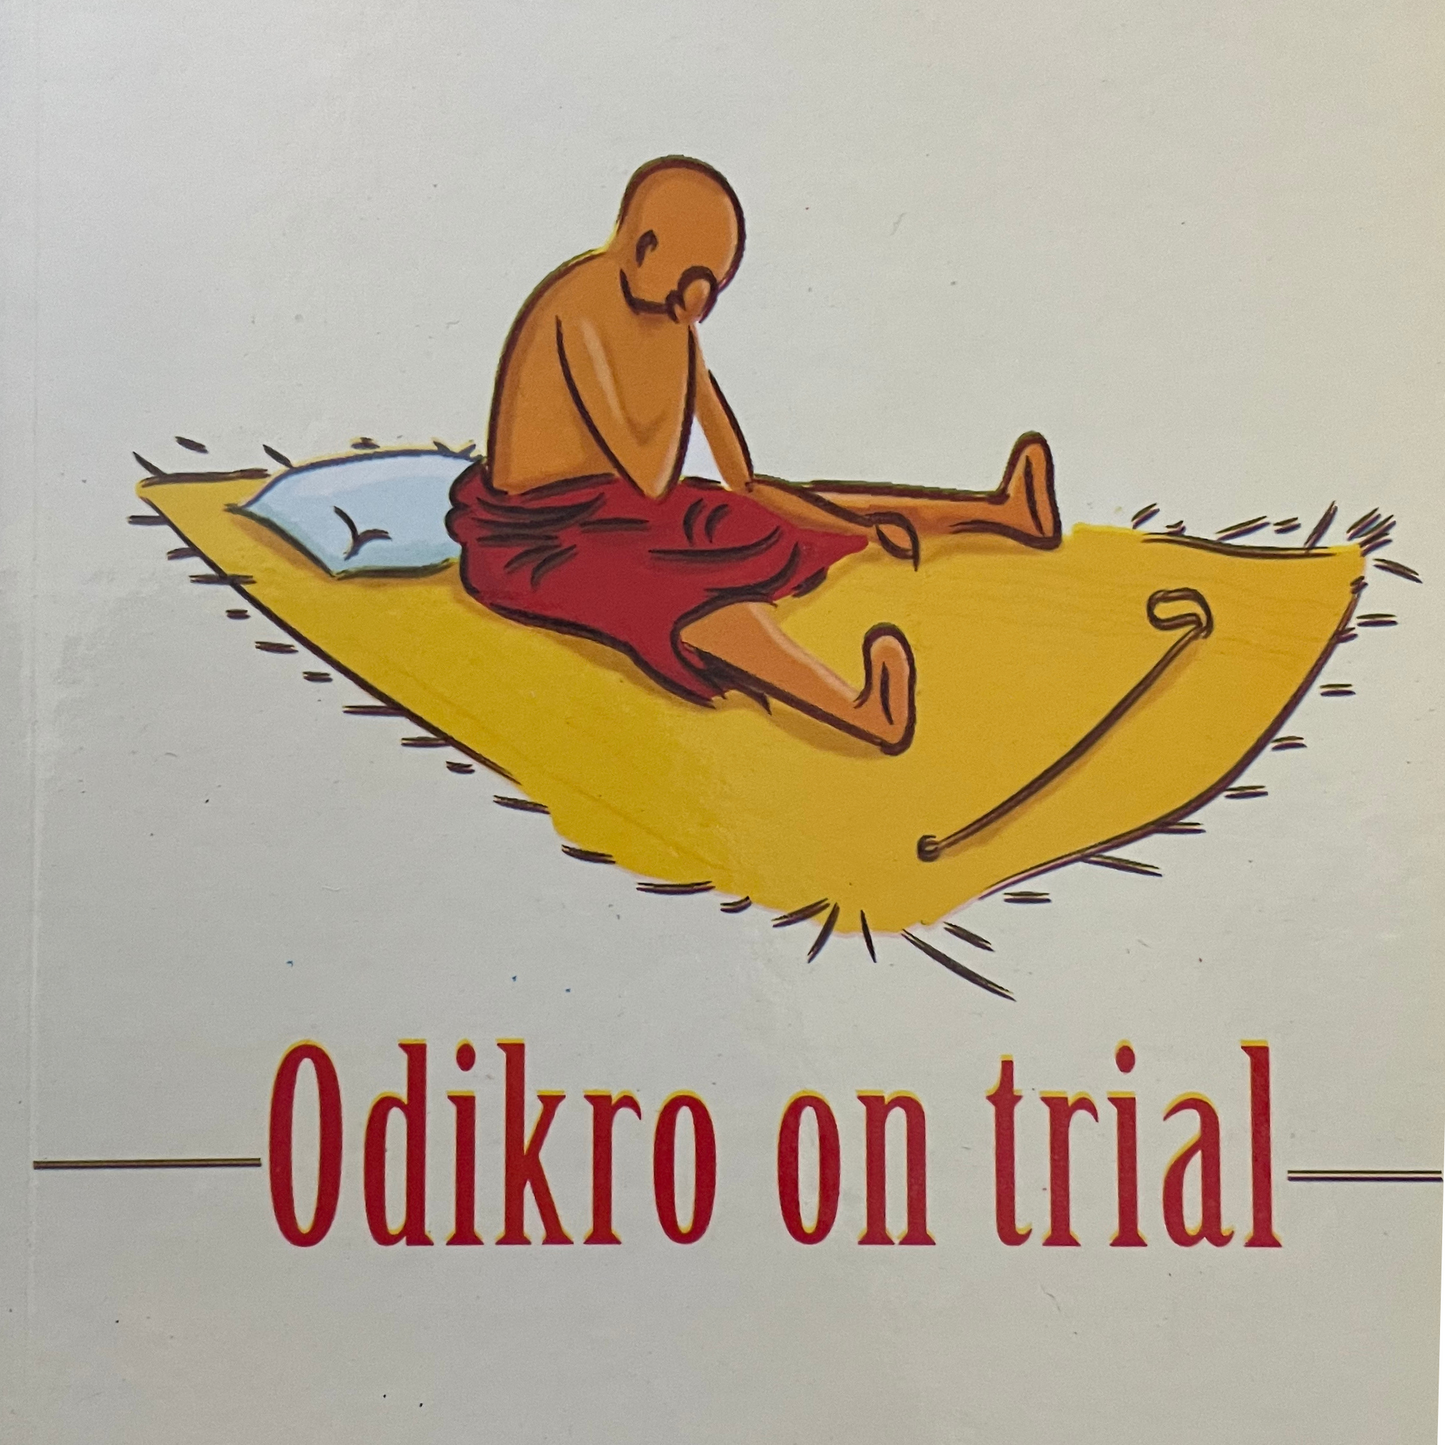 Odikro on trial